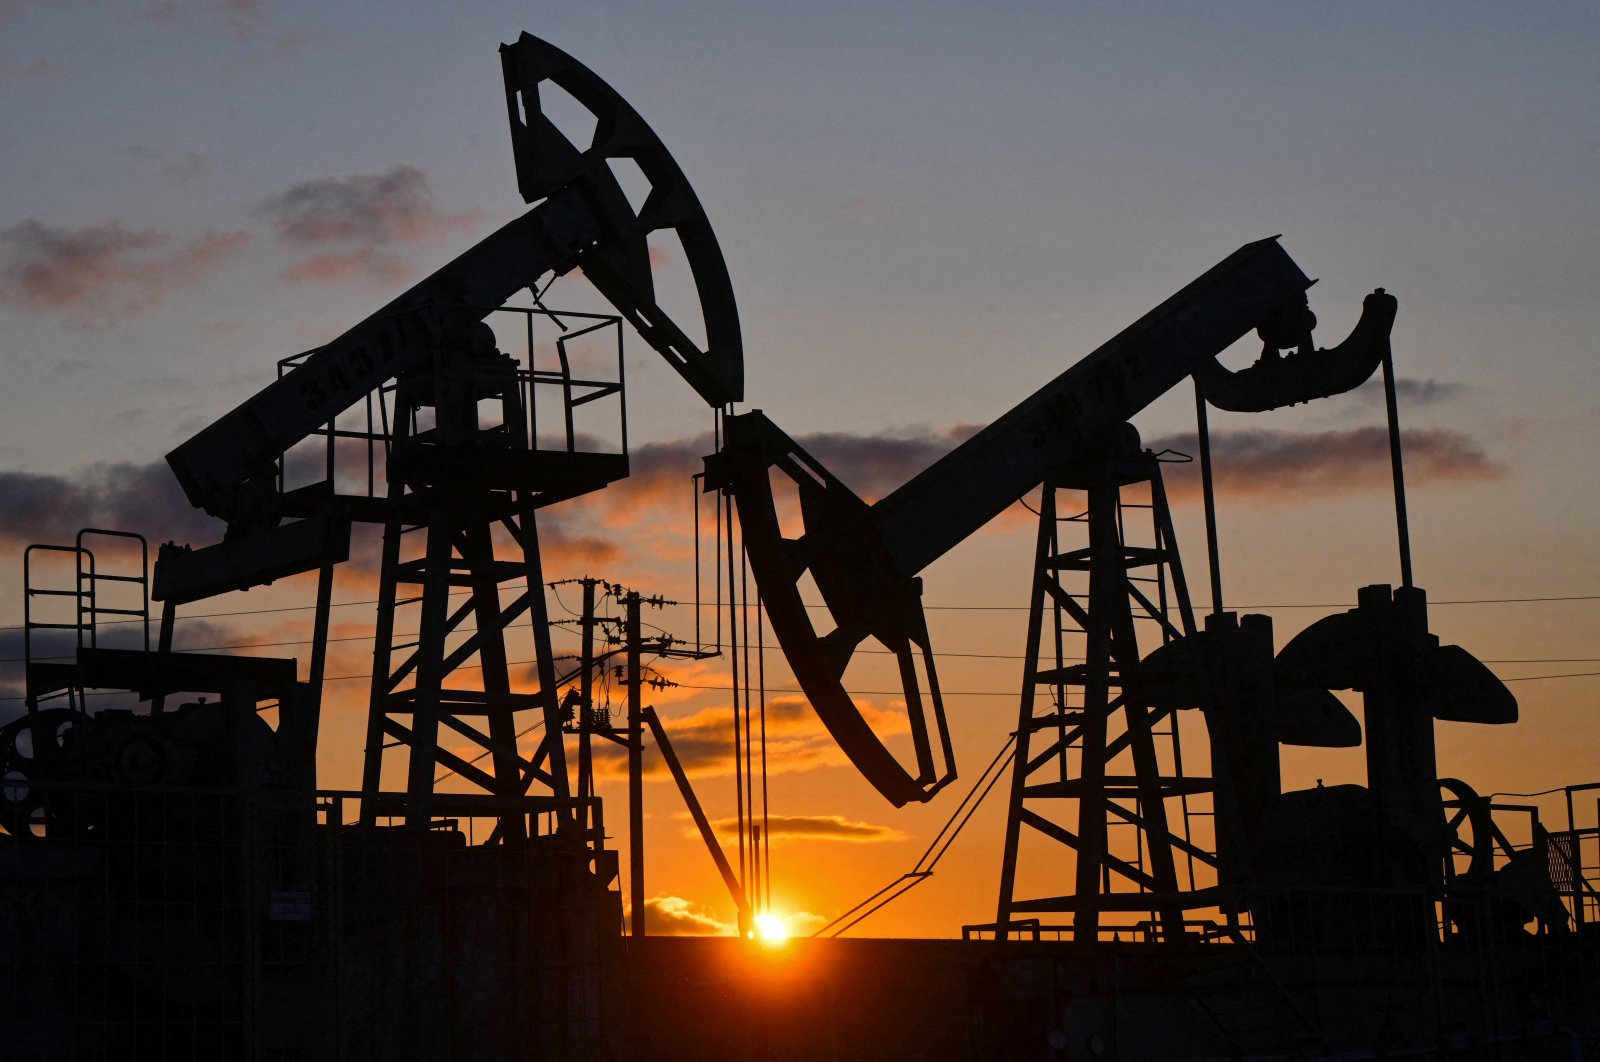 Türkiye saves $2 billion on Russian oil purchases, calculations show | Daily Sabah - Daily Sabah